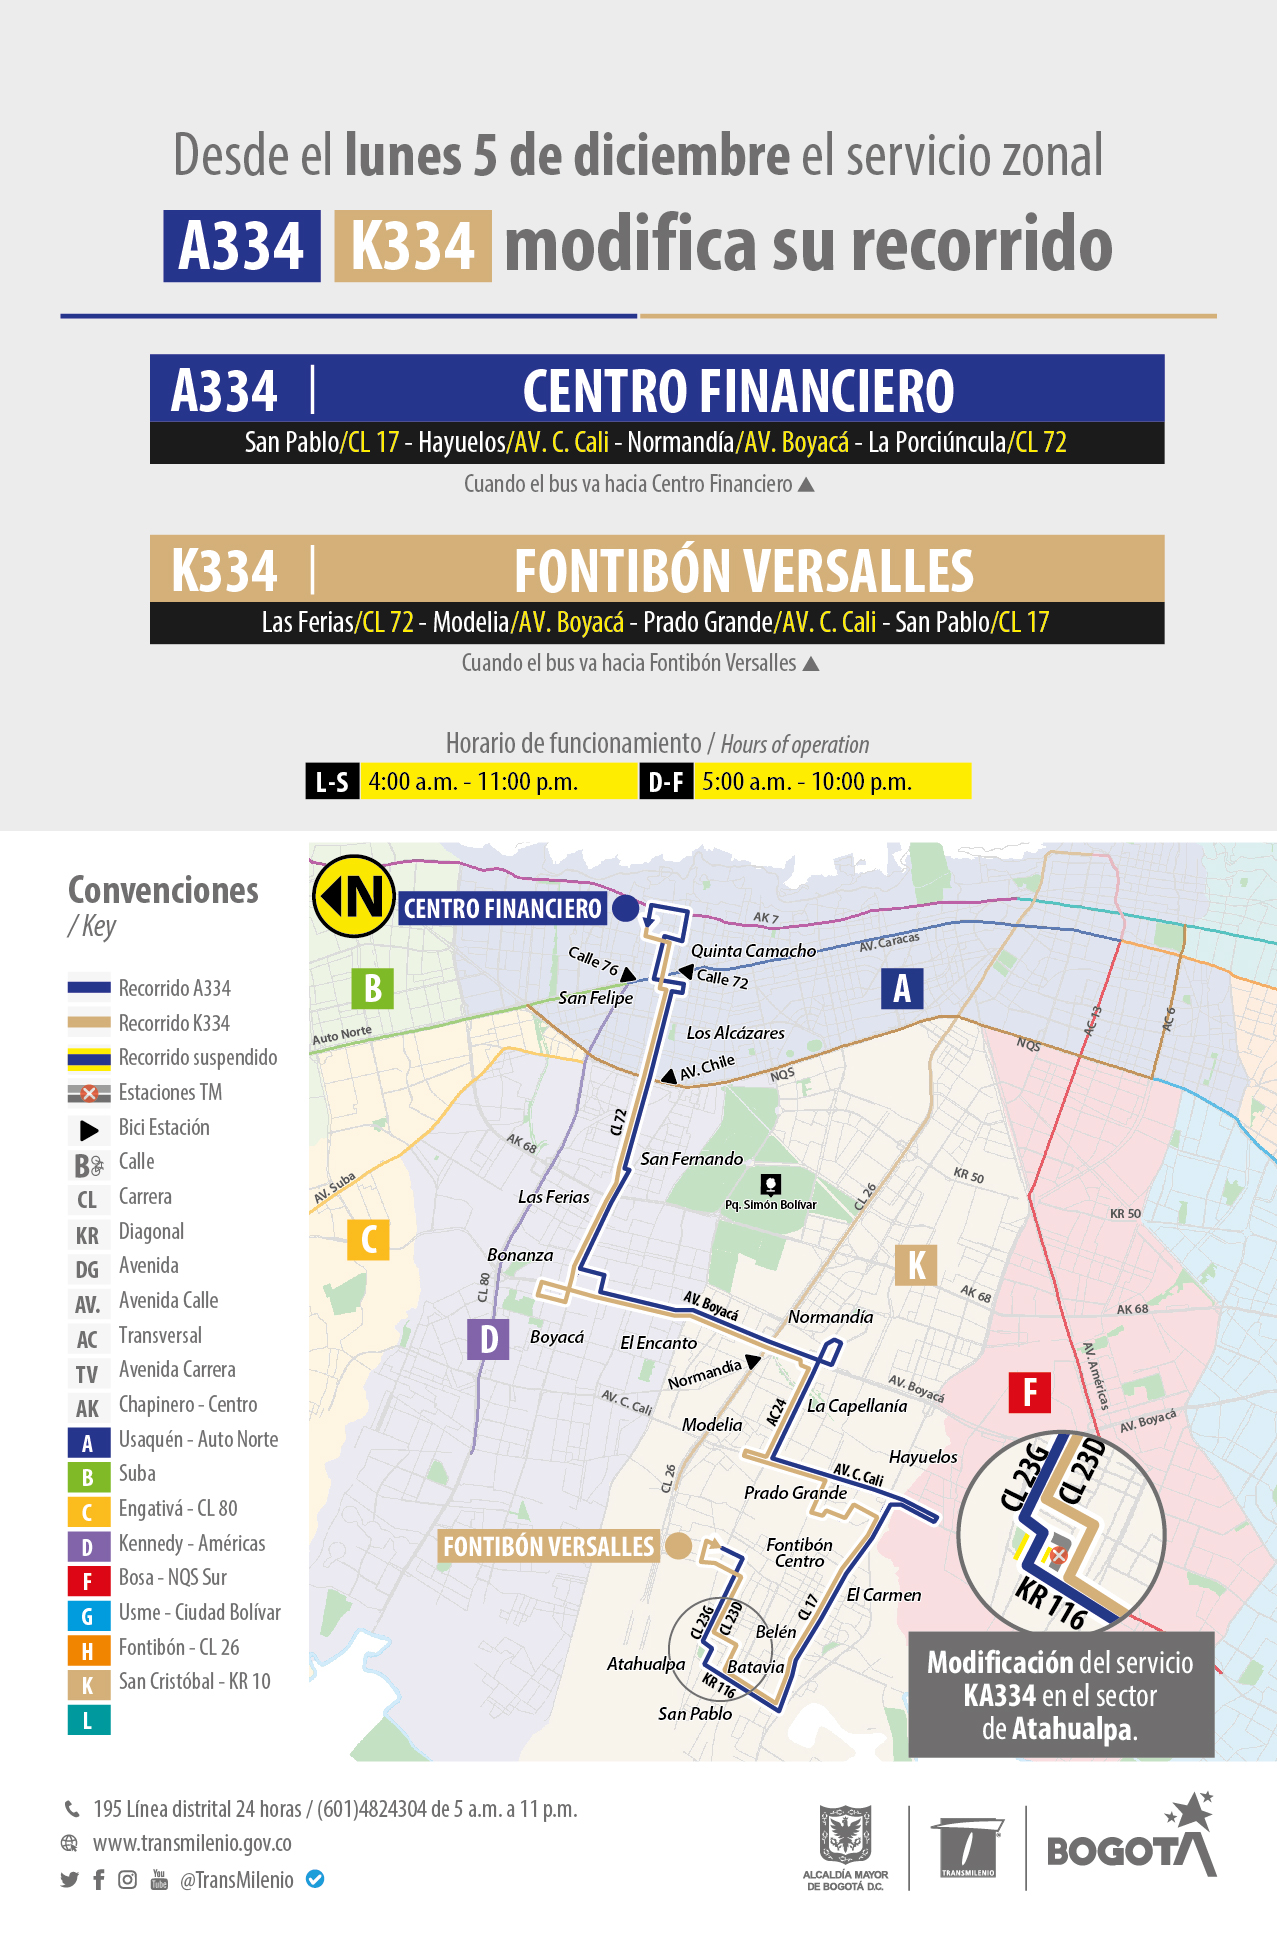 Recorrido de la ruta K334-A334 en el sector de Atahualpa